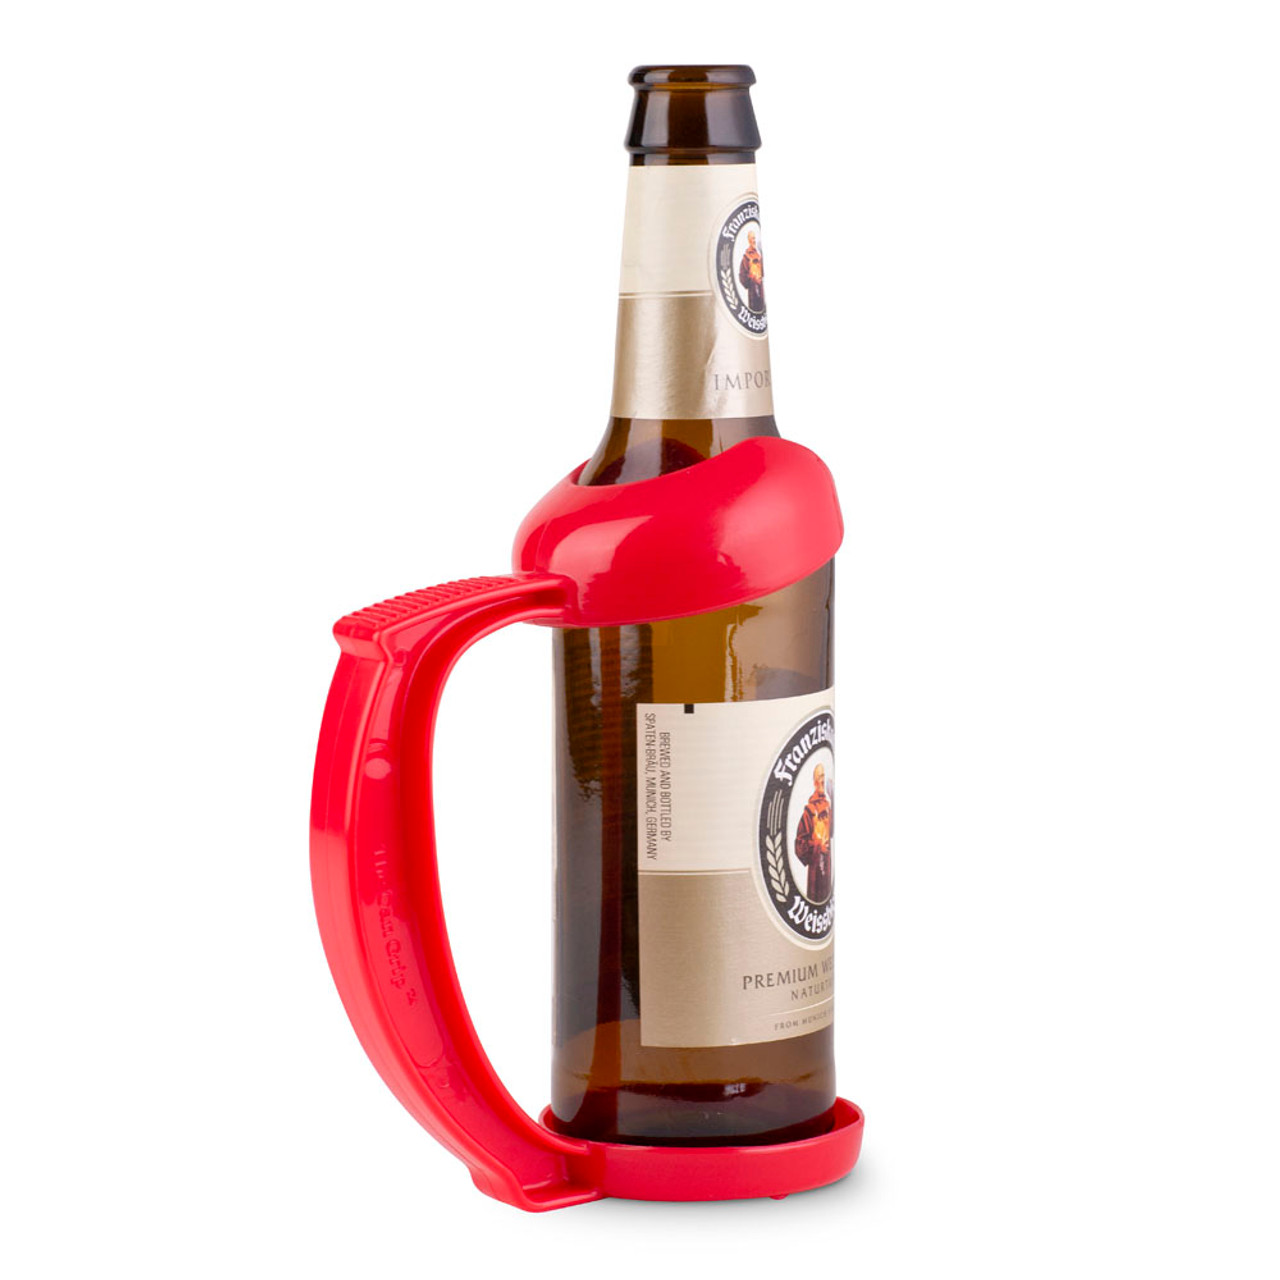 https://cdn11.bigcommerce.com/s-cznxq08r7/images/stencil/1280x1280/products/4572/12229/BOTTLEGRIP-RED-Instant-Beer-Stein-Bottle-Grip-Handle-12-oz-Red-1__51188.1603147151.jpg?c=1